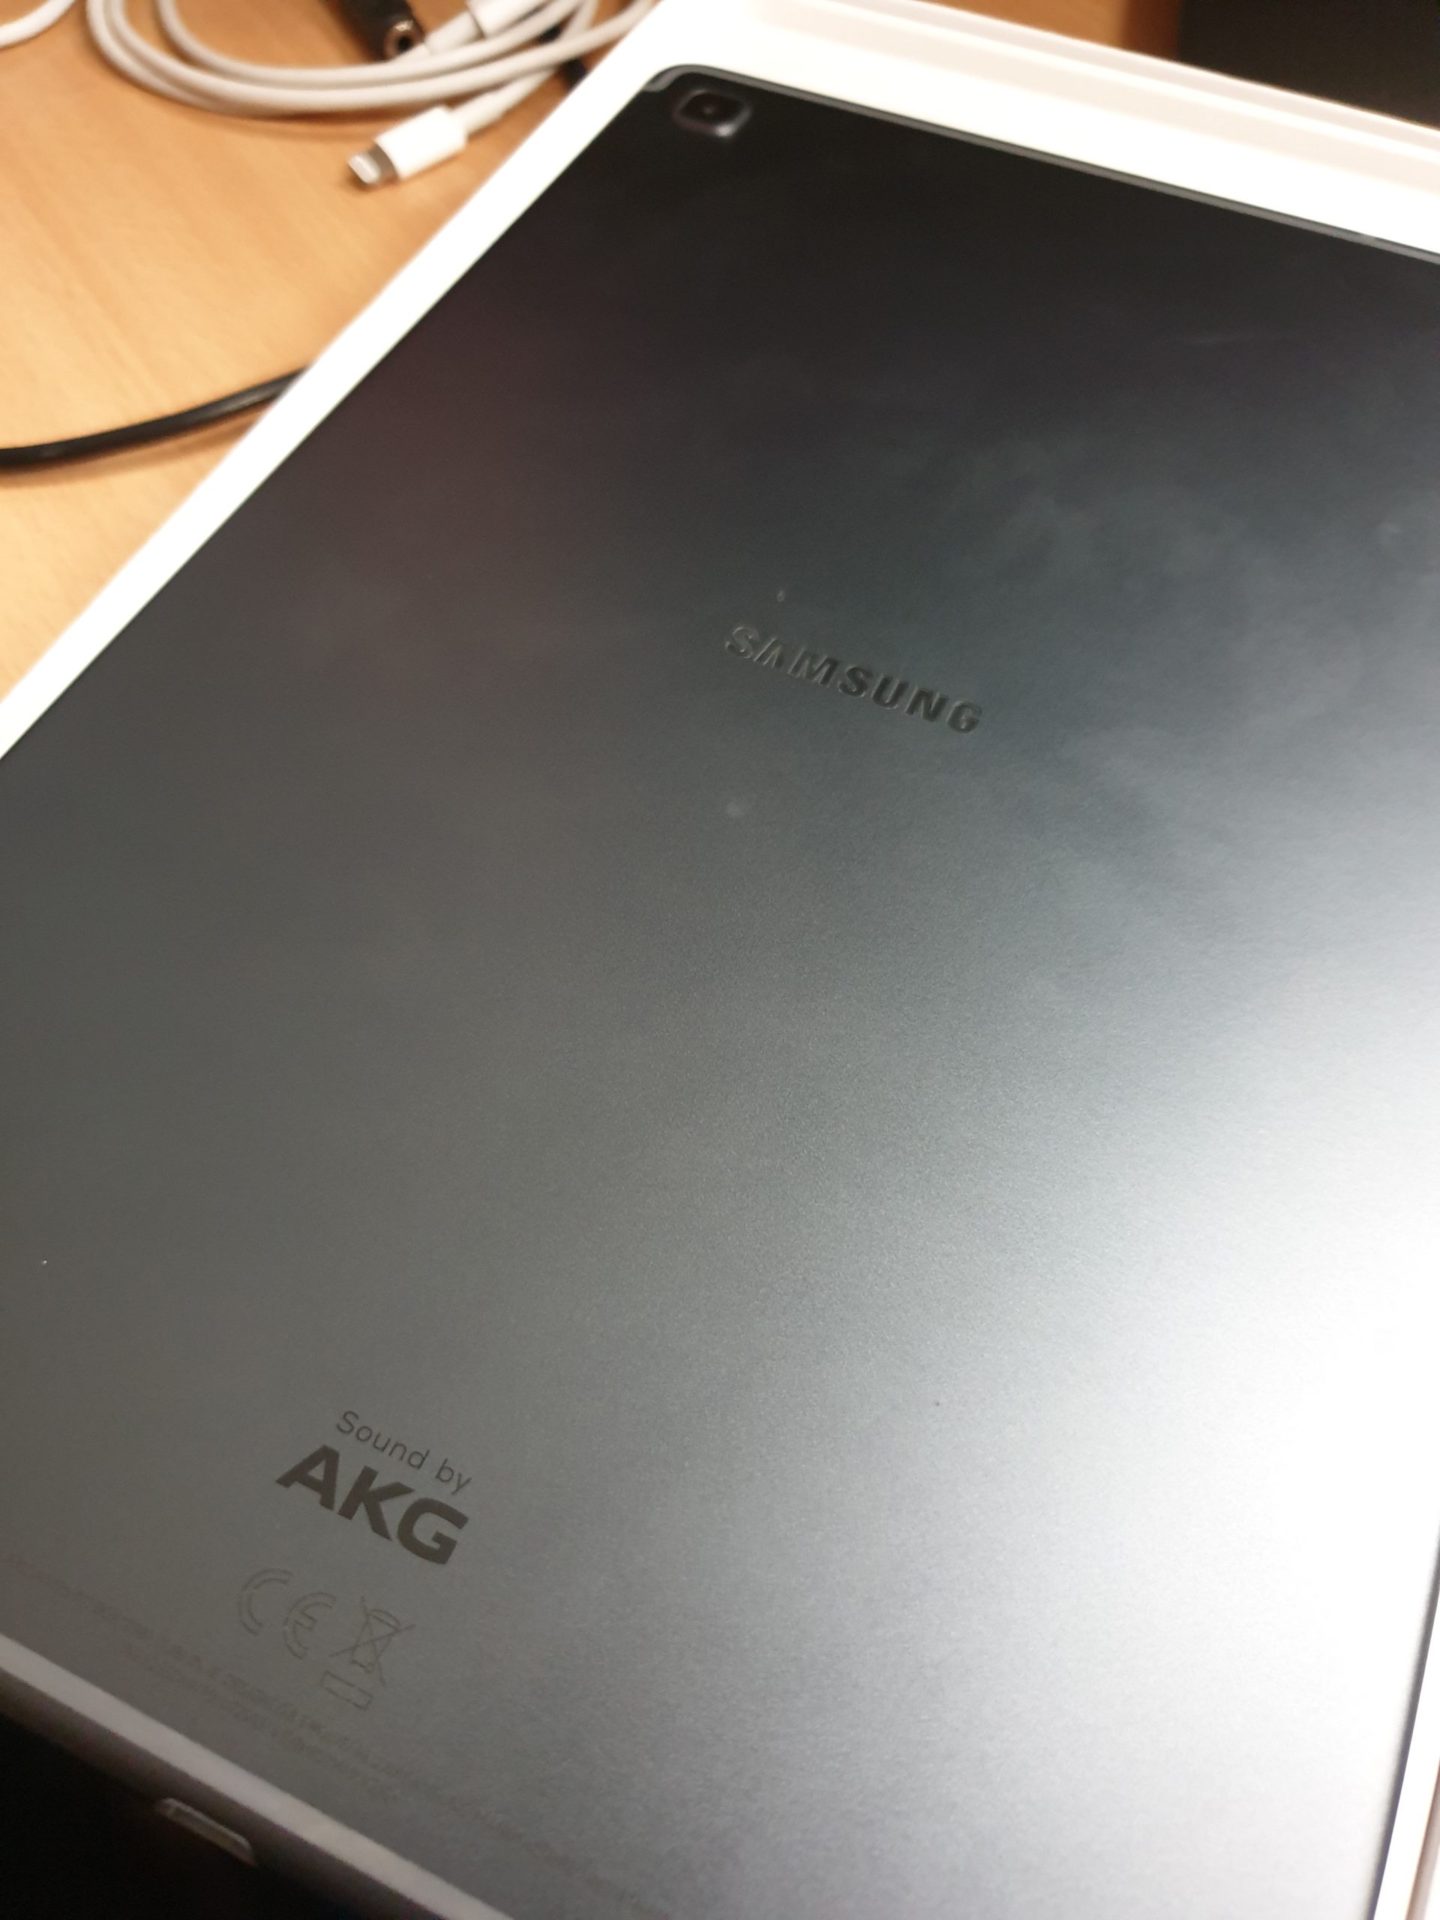 Samsung Galaxy TAB S5e tined by AKG